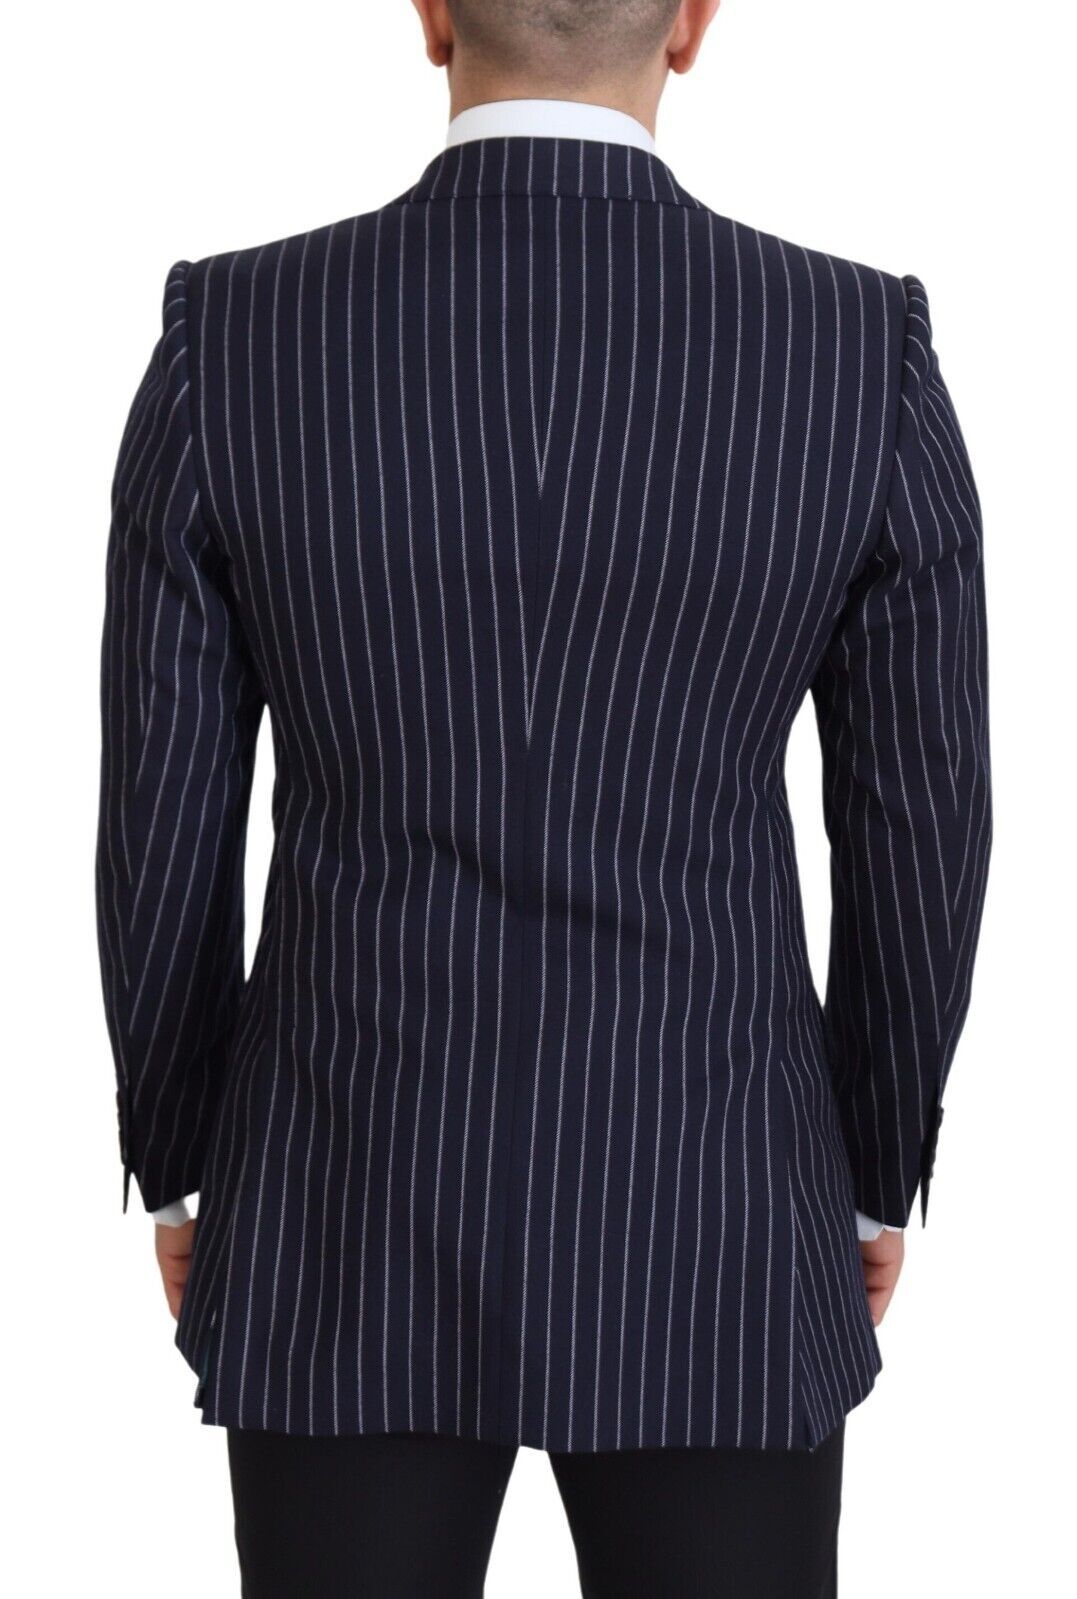 Dolce & Gabbana Dark Blue Stripe Wool Single Breasted Blazer